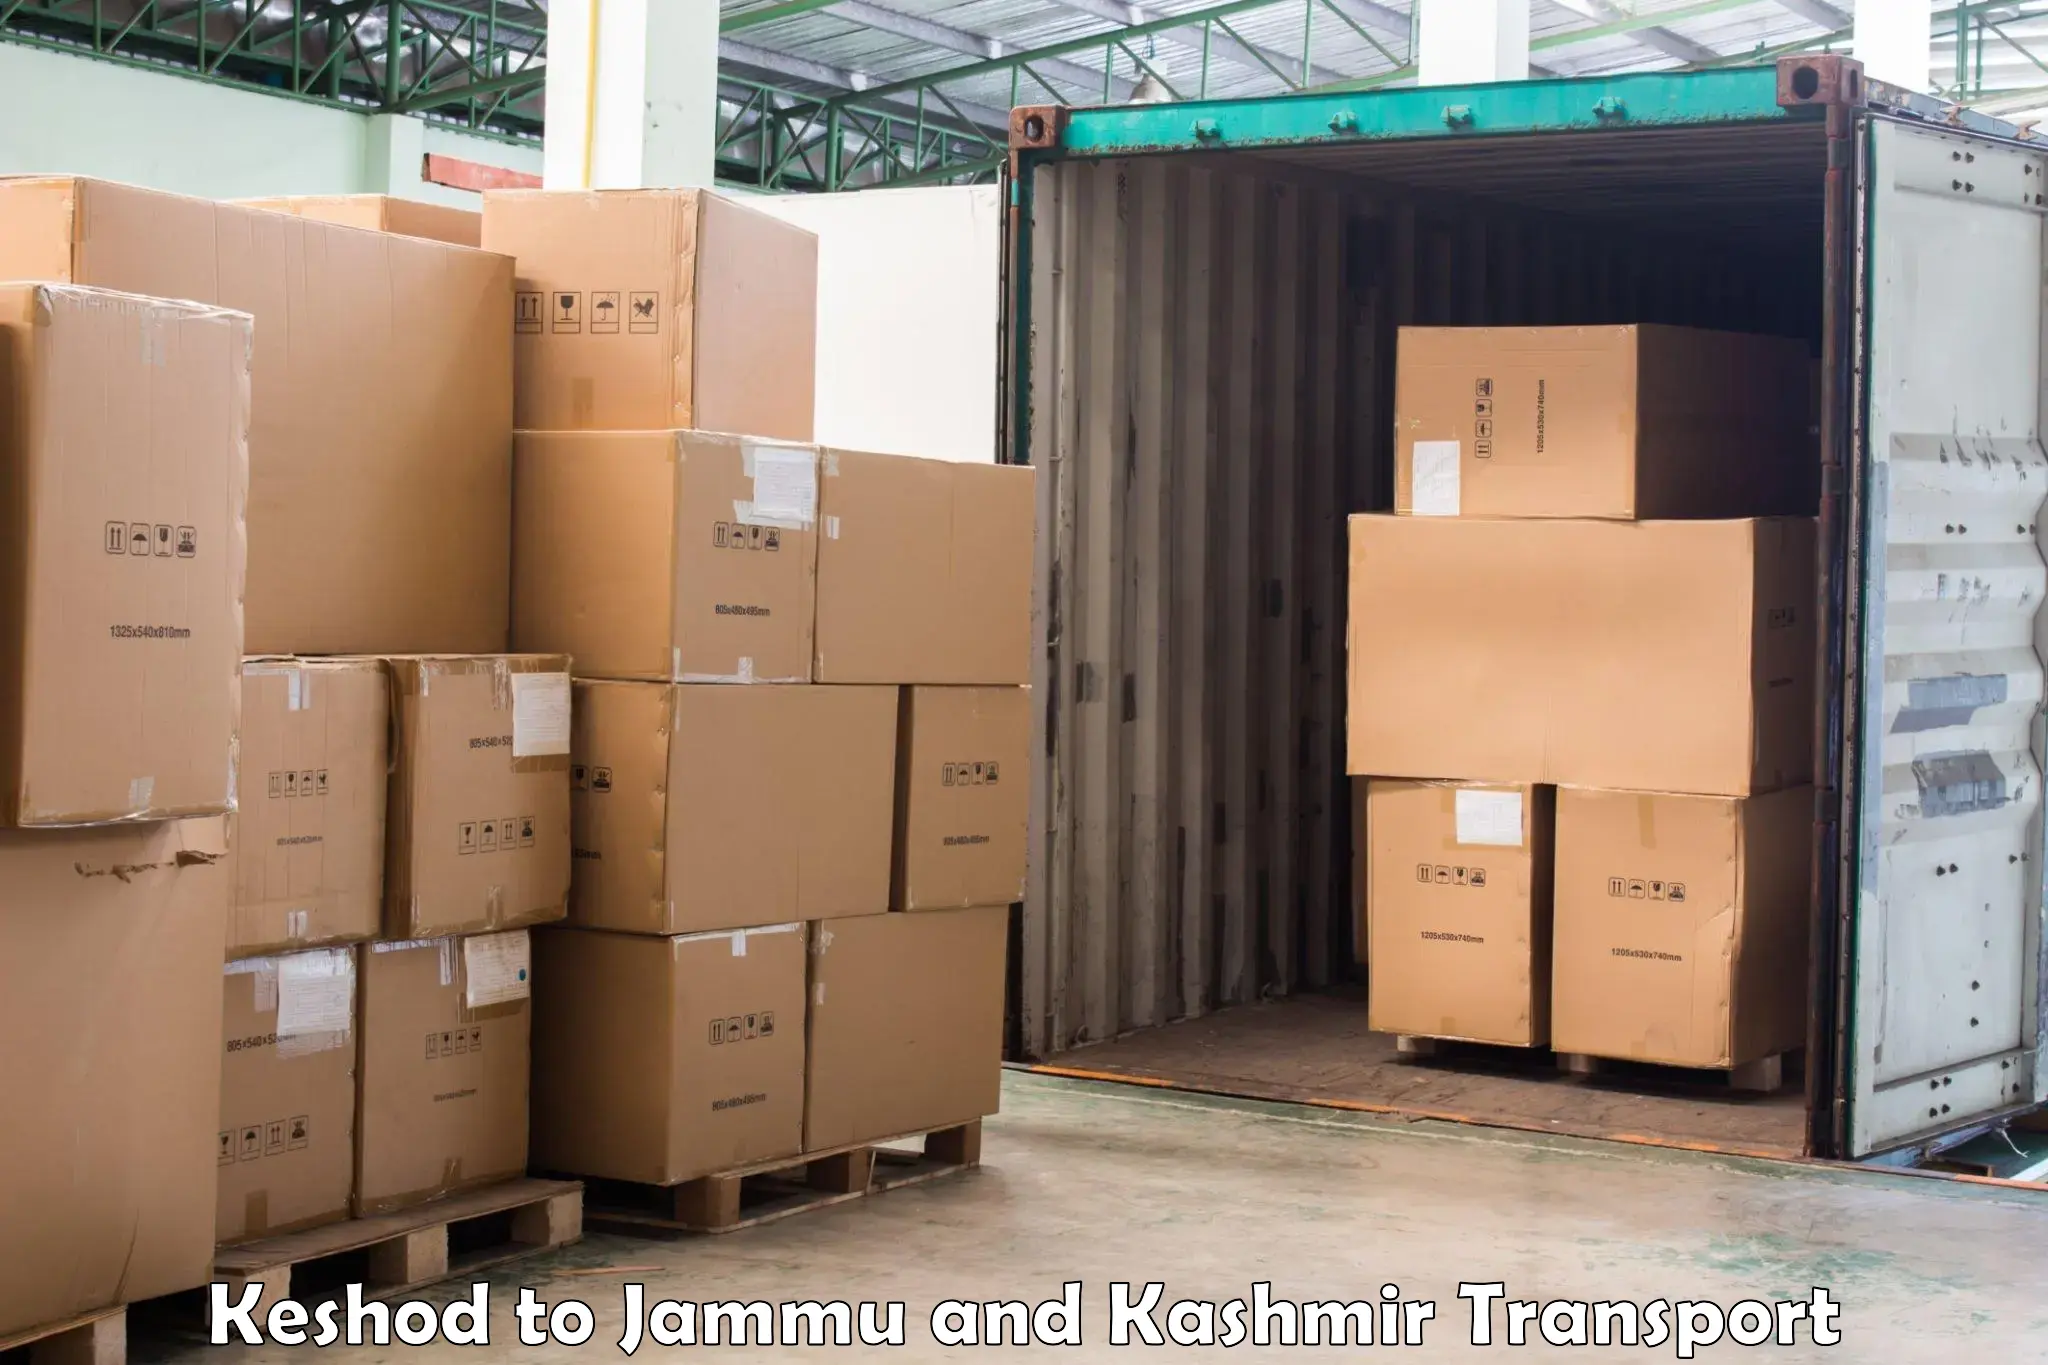 Daily transport service Keshod to Jammu and Kashmir